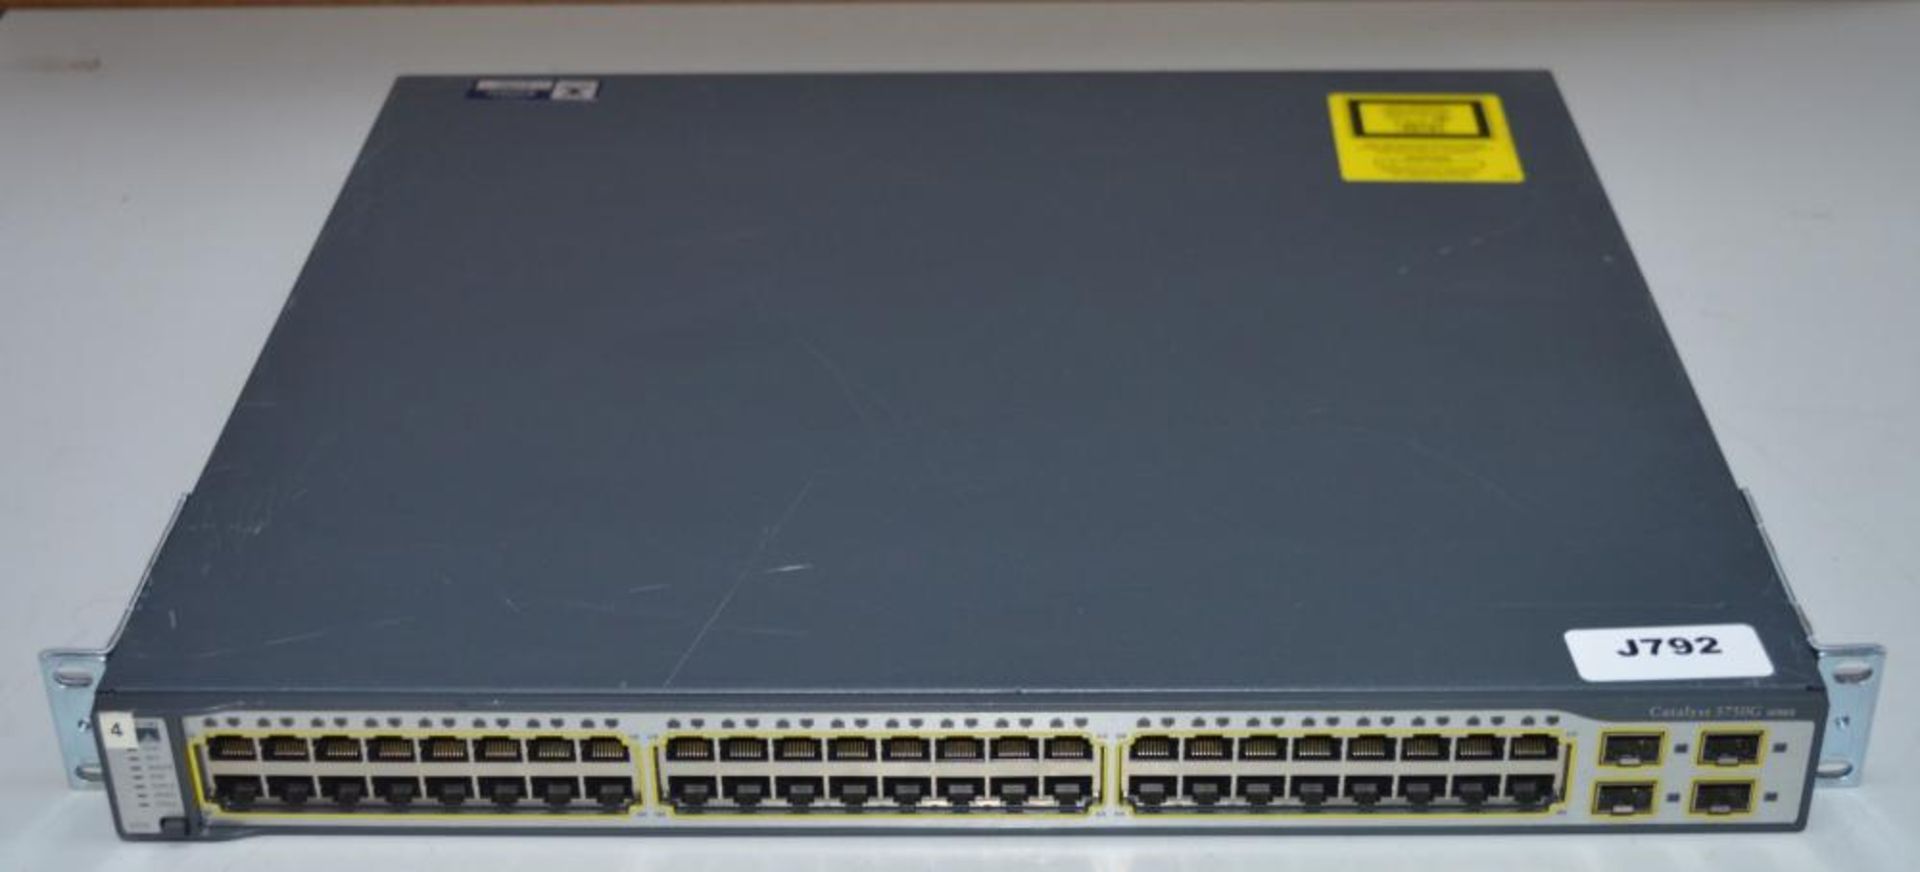 1 x Cisco Catalyst 3750G Series WS-C3750G-48TS 52 Port Network Switch - CL285 - Ref J792 - Location: